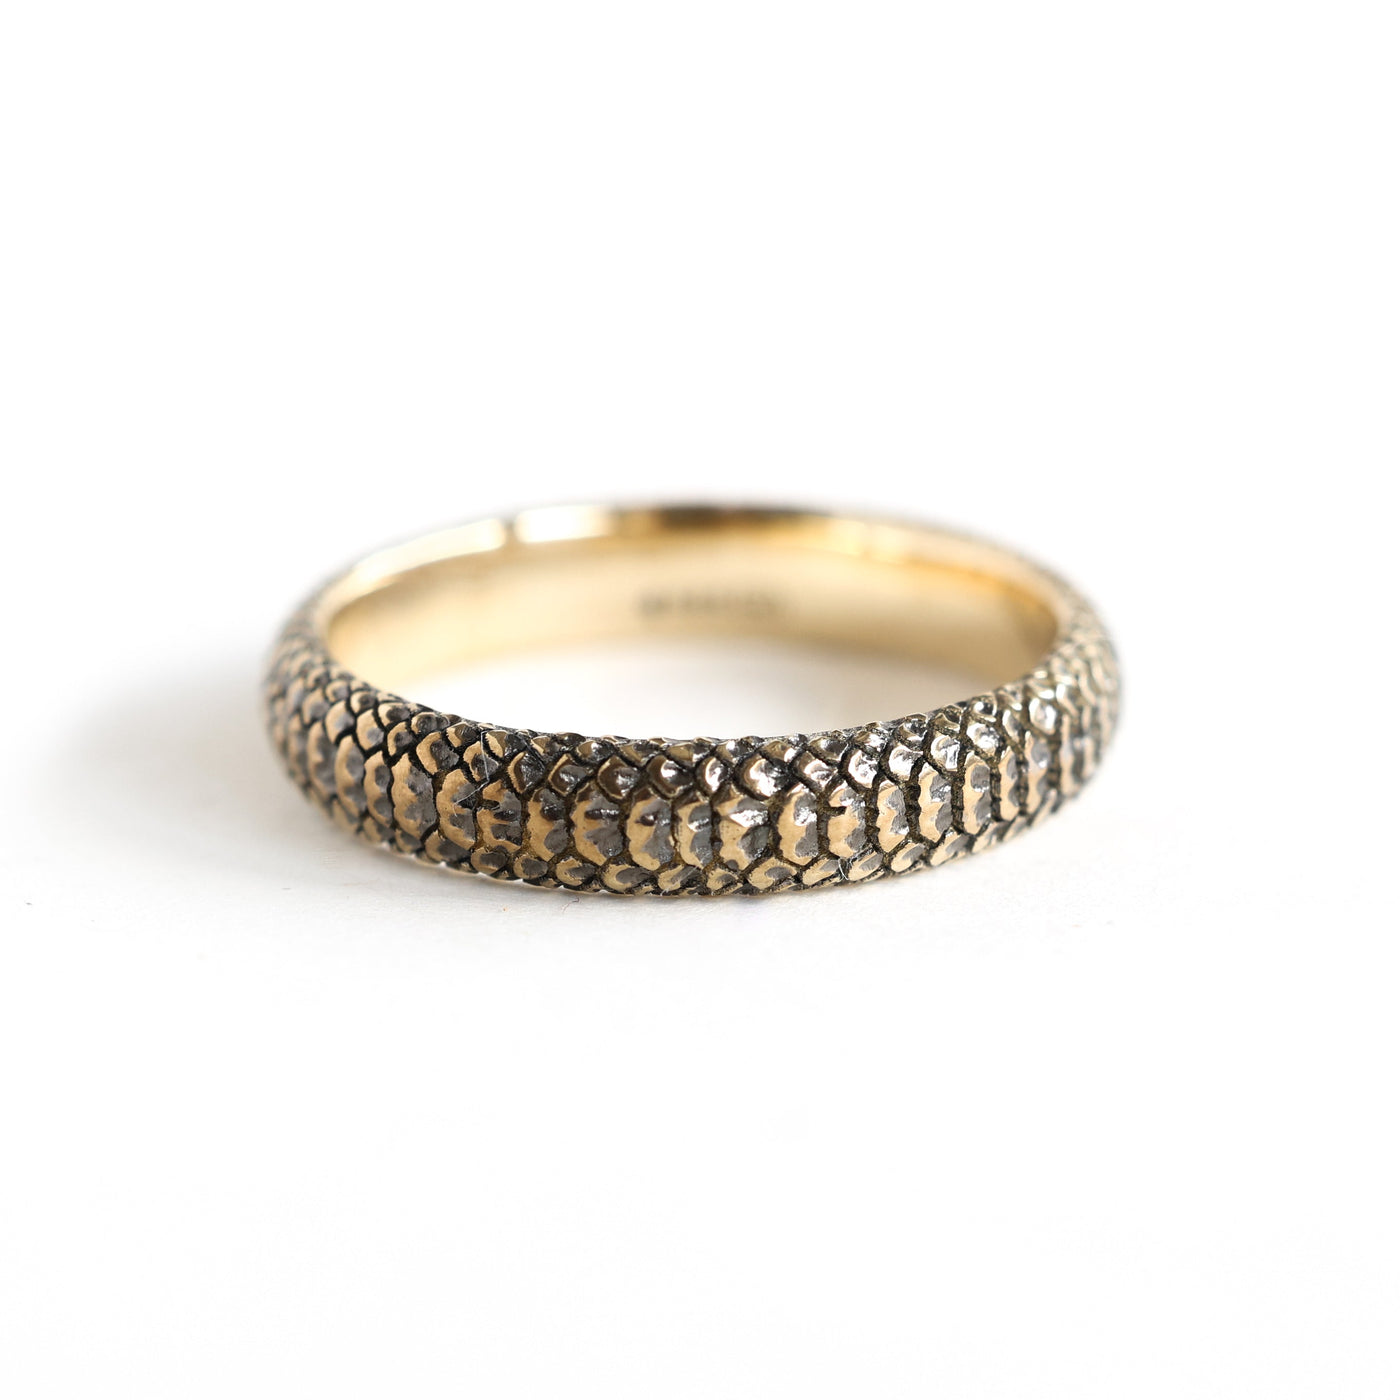 Gold snake band textured ring, 14k & 18k gold options, customizable gemstones.